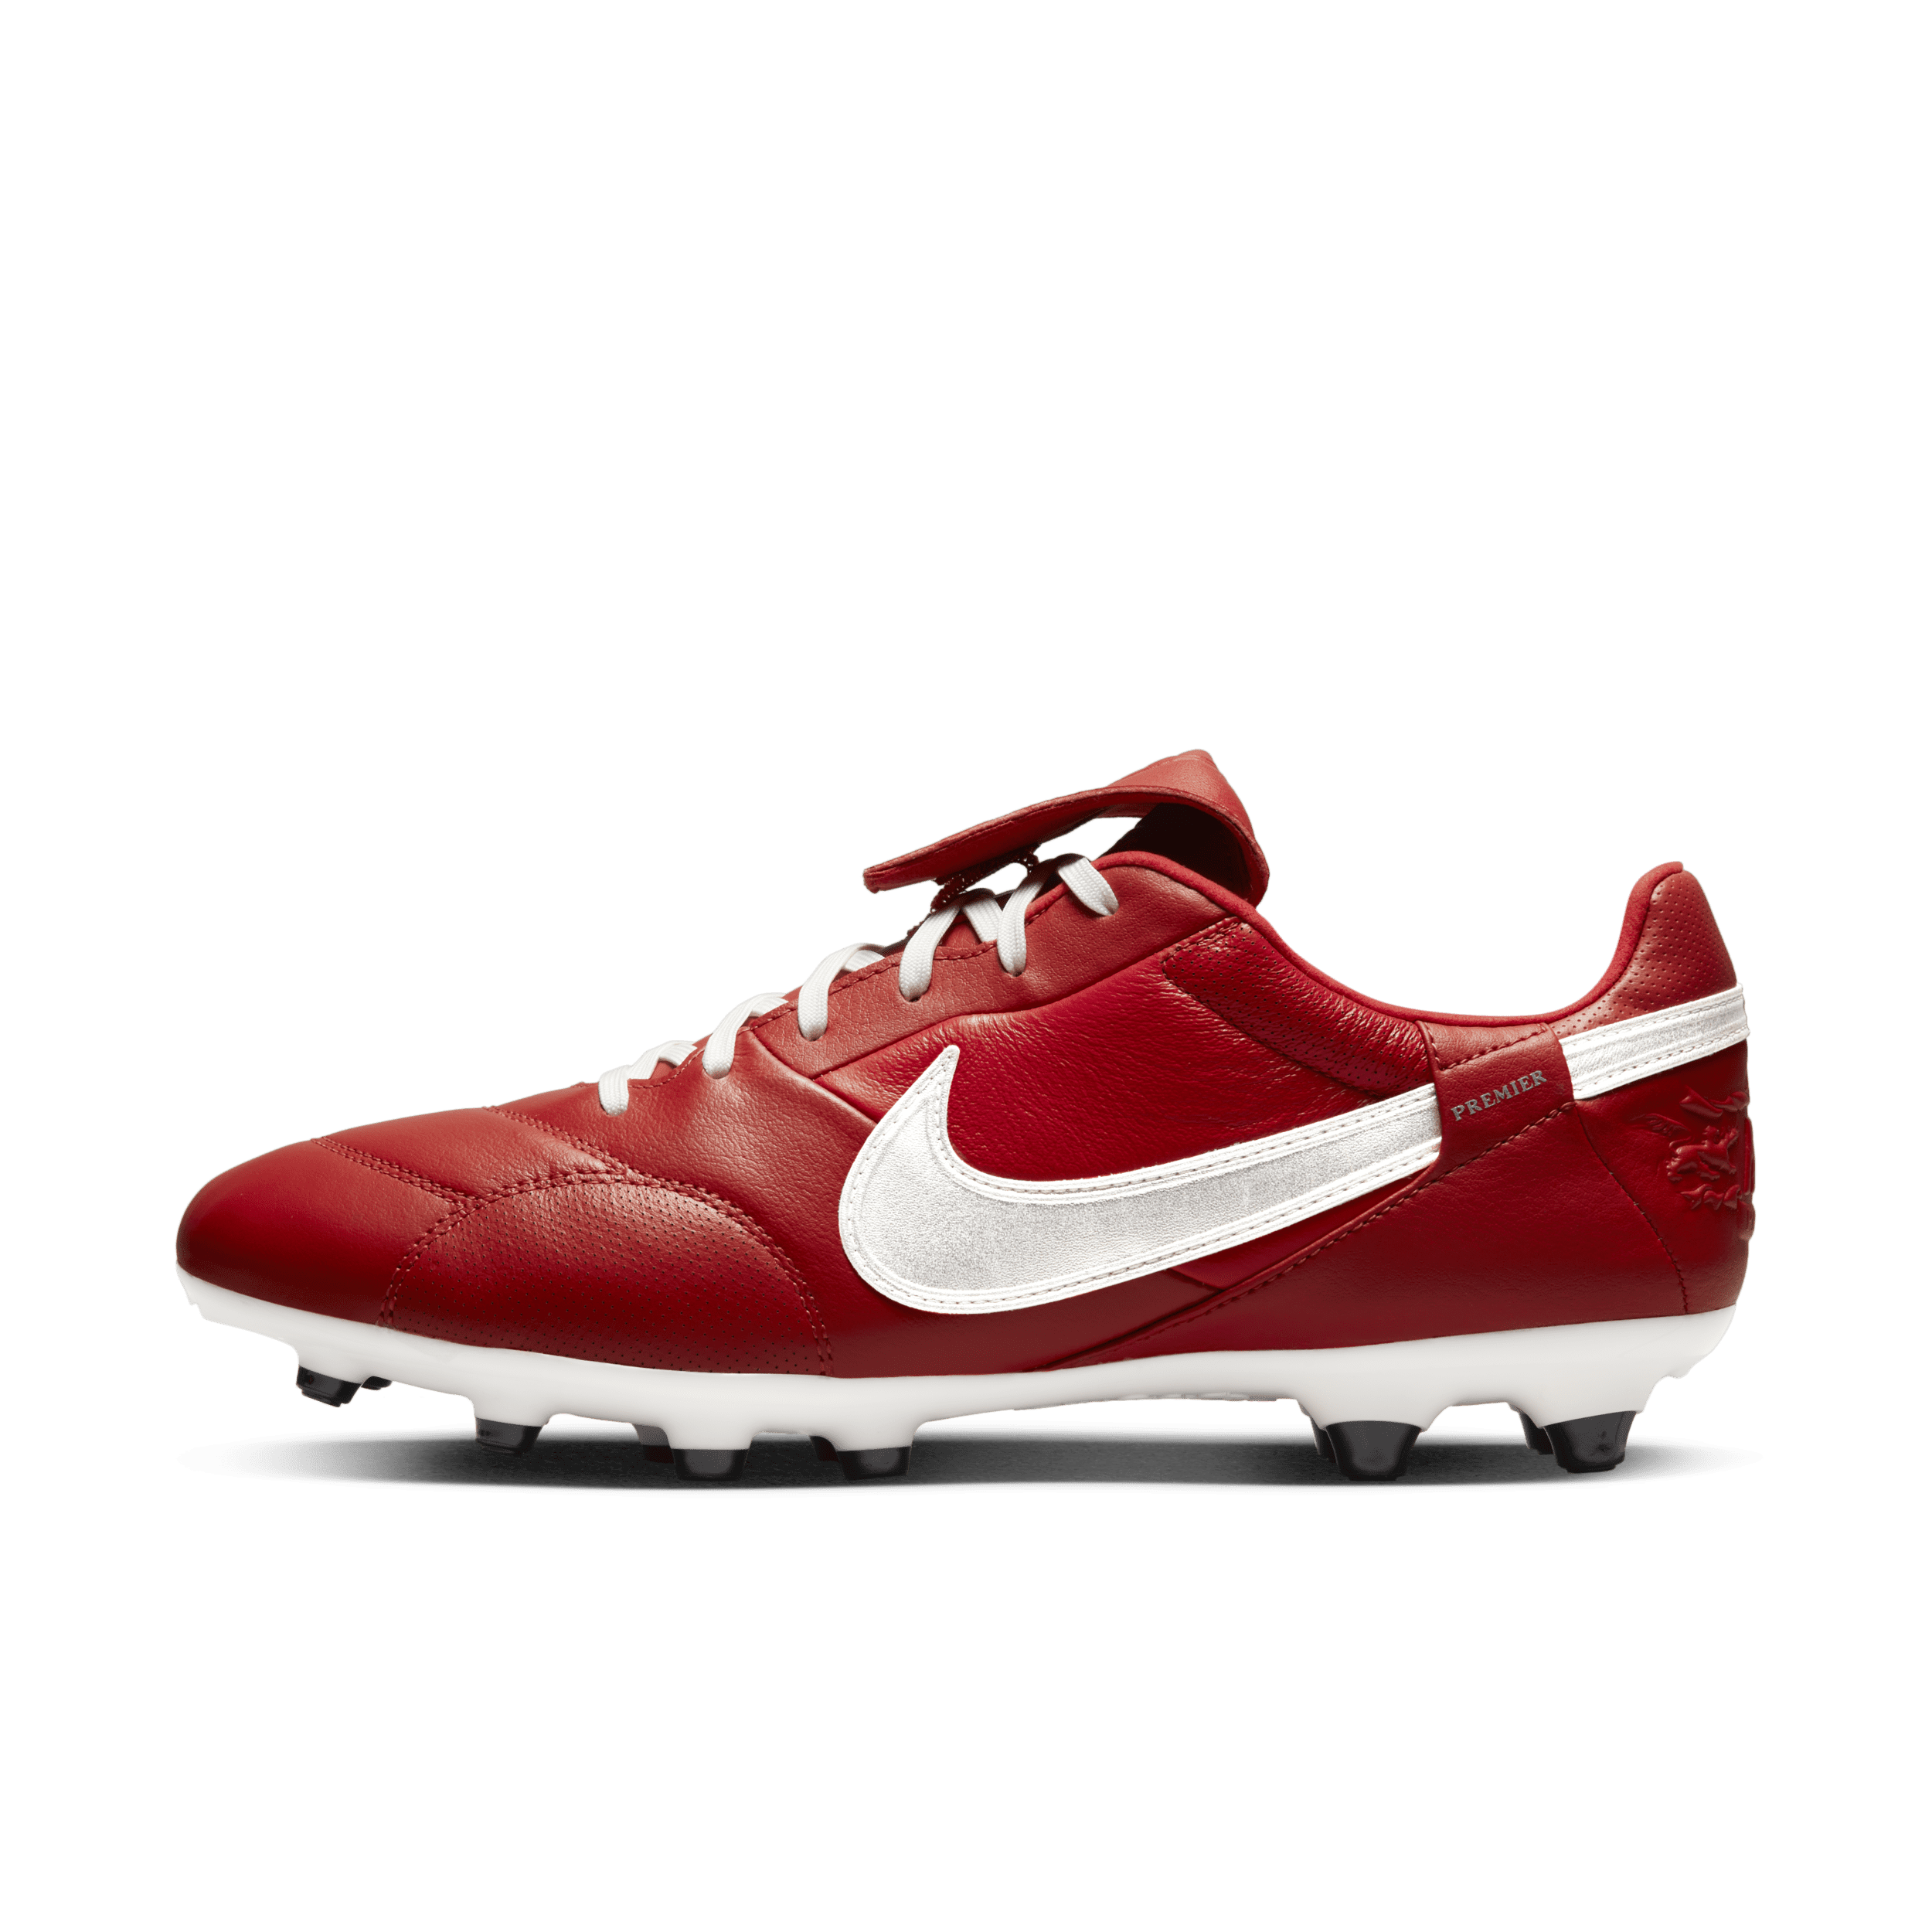 The Nike Premier 3 FG Voetbalschoenen (stevige ondergrond) – Rood